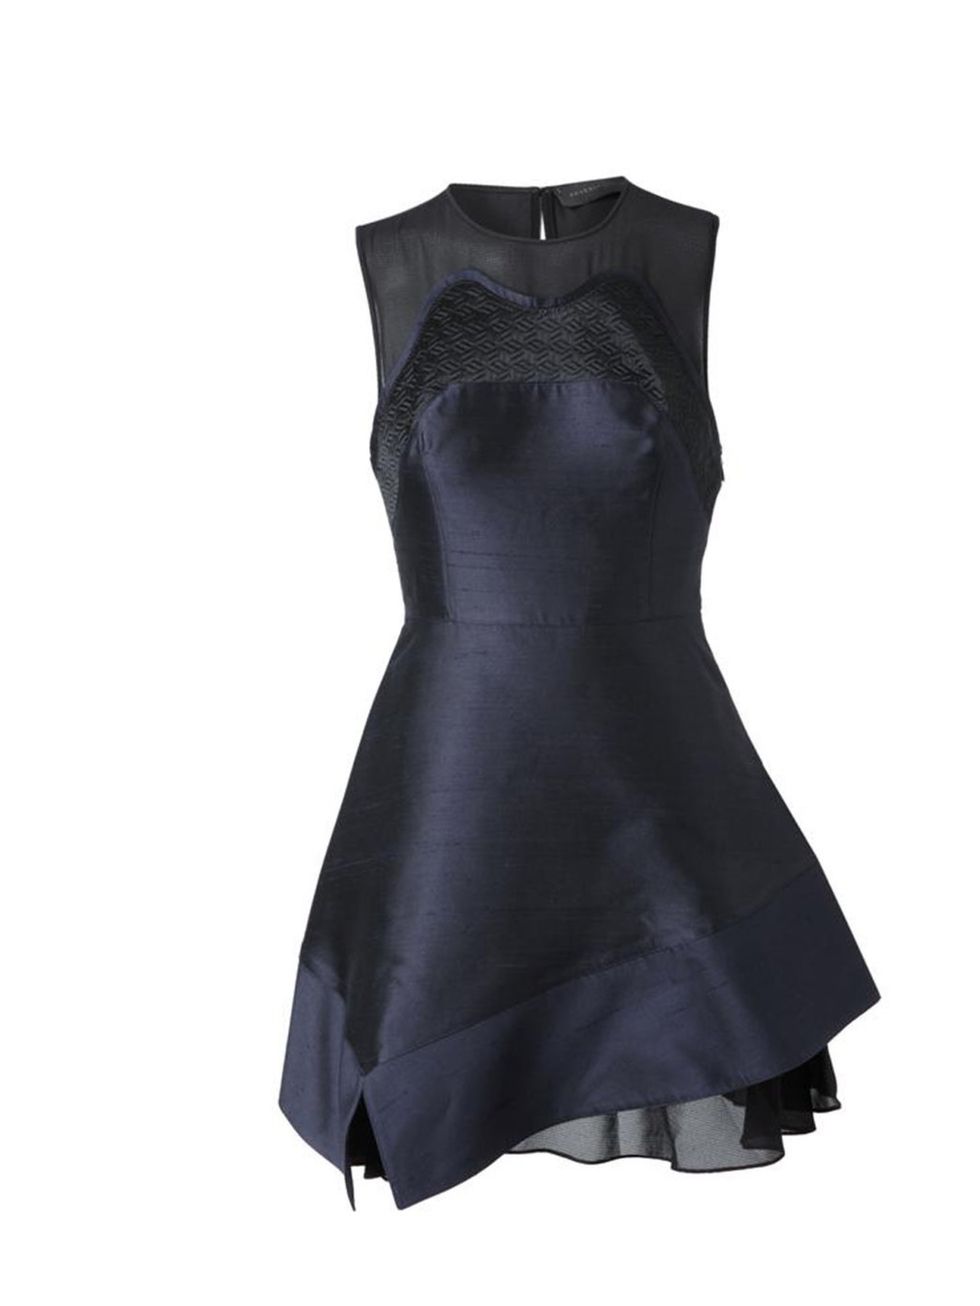 <p>Proenza Schouler shantung silk dress, £1560 at Browns </p><p><a href="http://www.brownsfashion.com/Product/Women/Clothing/Dresses/Shantung_Silk_Dress/product.aspx?p=4543417&amp;cl=4&amp;pc=1949762">SHOP NOW</a></p>